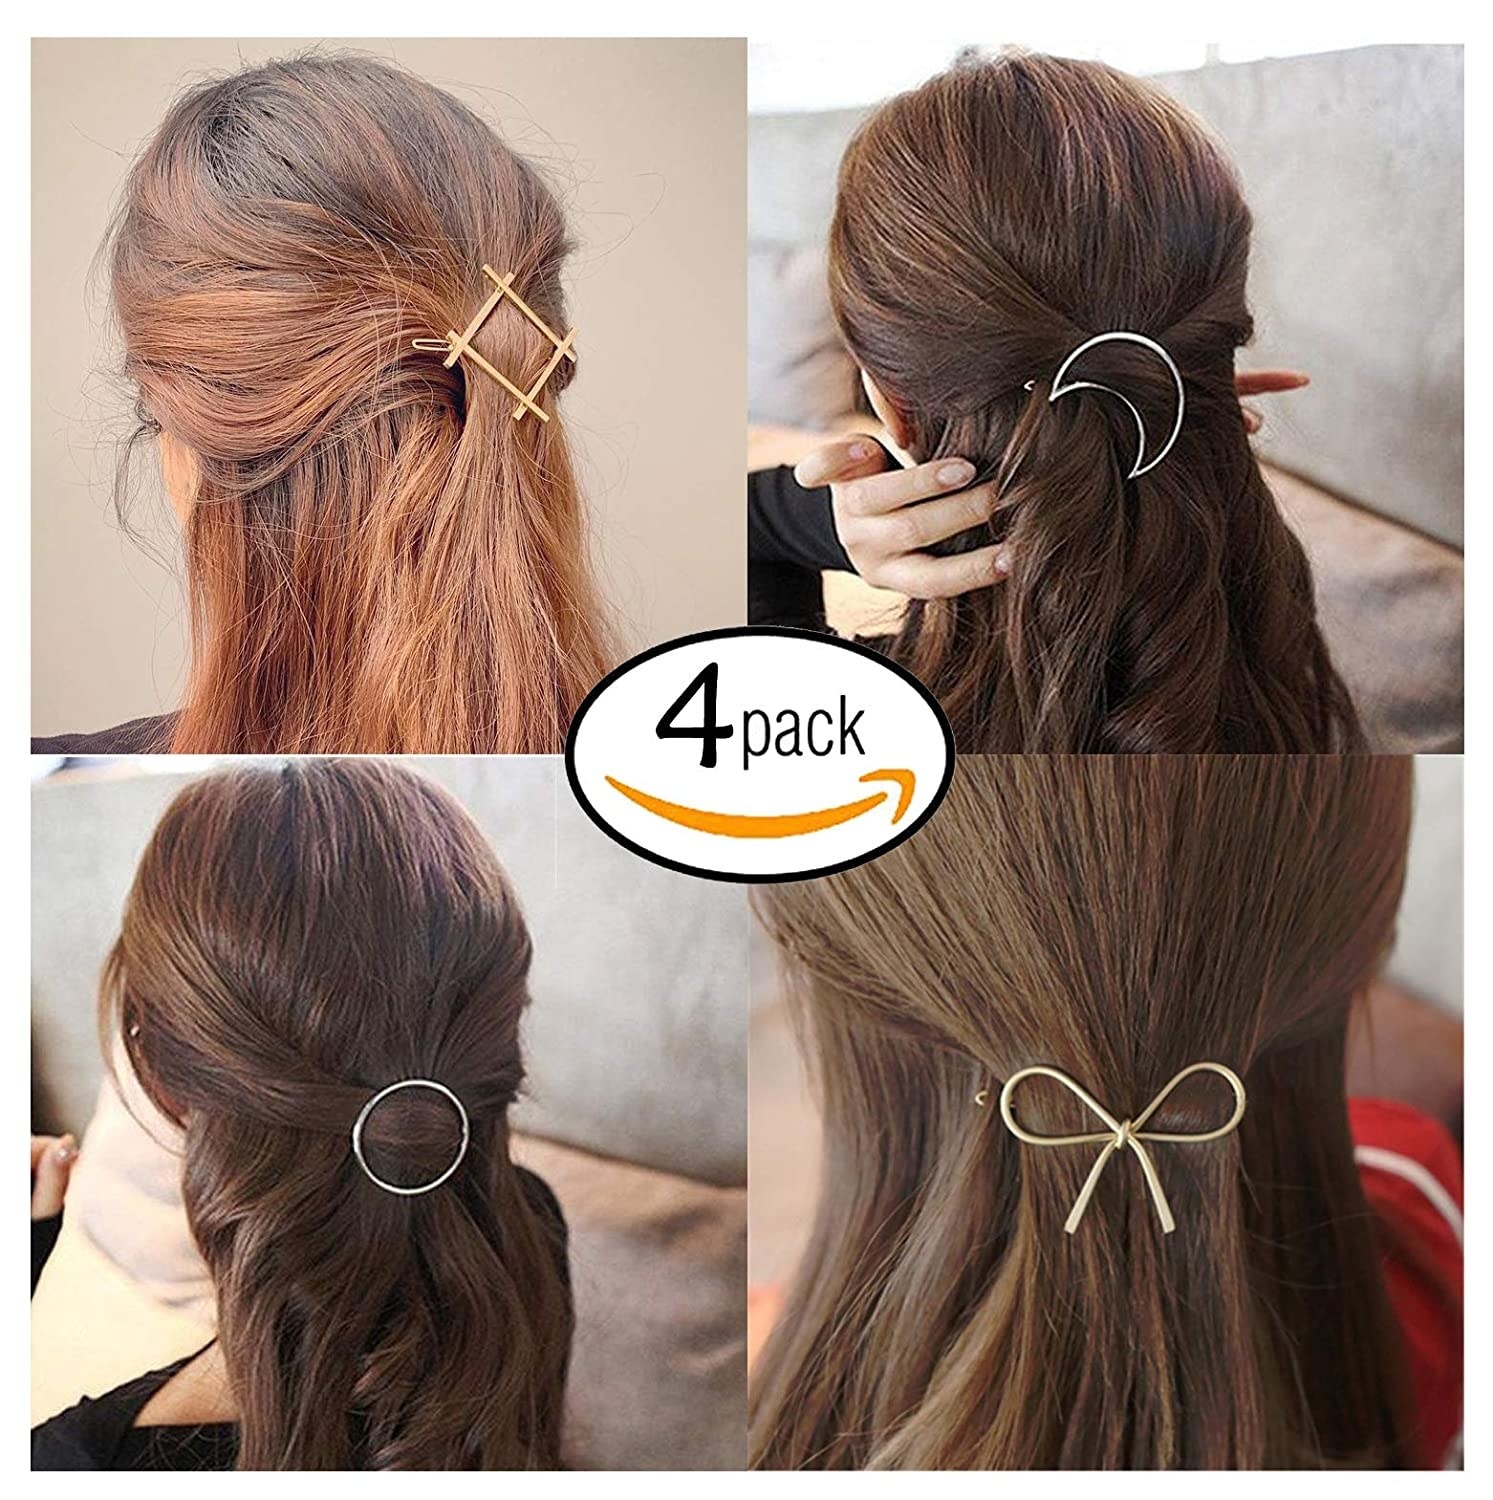 Diamond-shaped, moon-shaped, bow-shaped, and circular hair clips